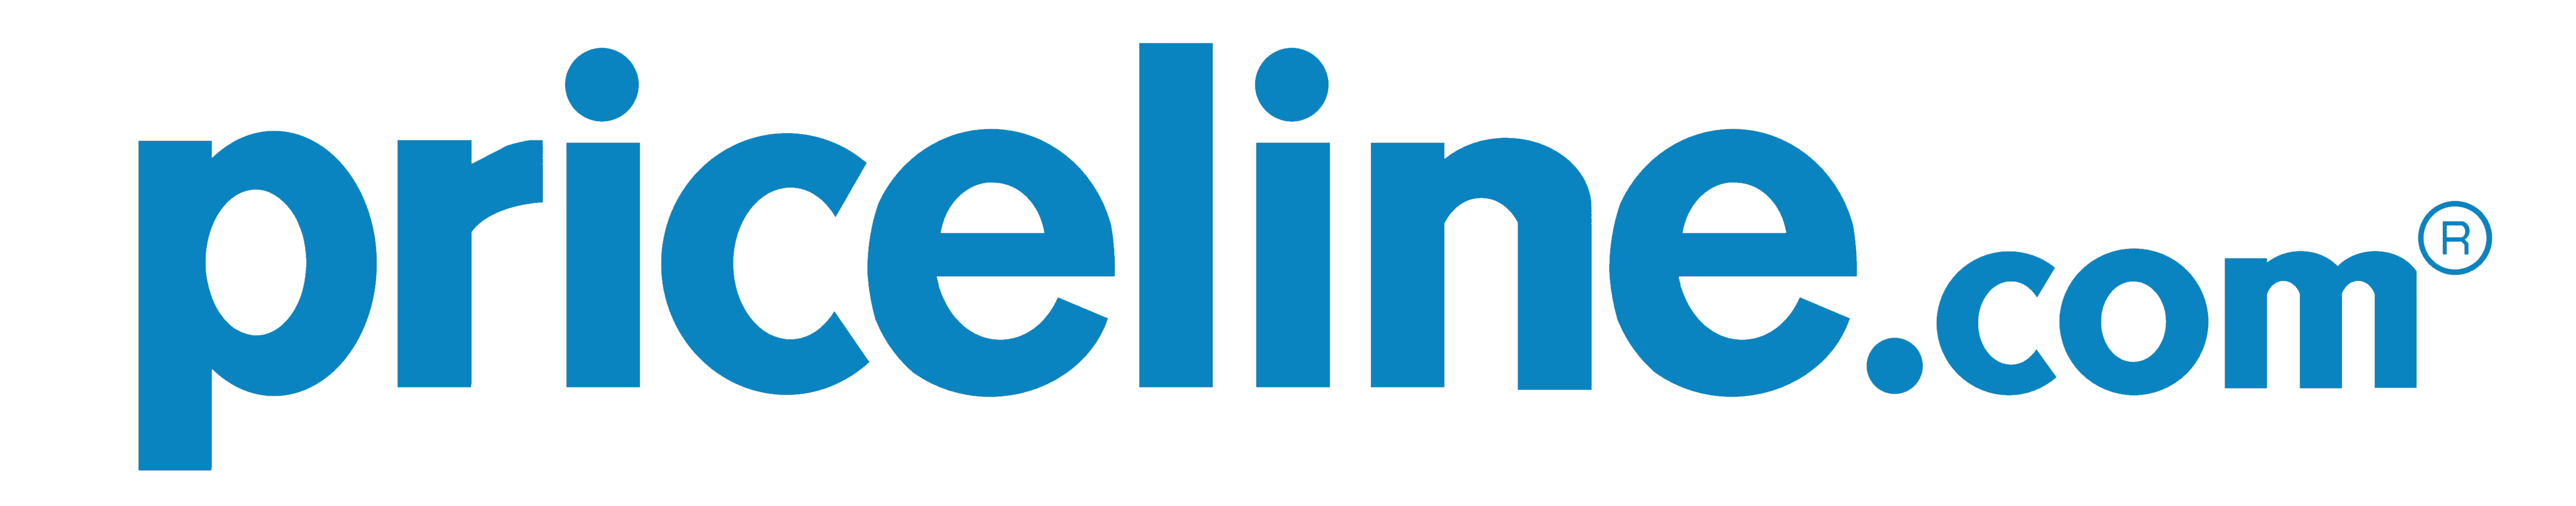 priceline.com Brand Logo